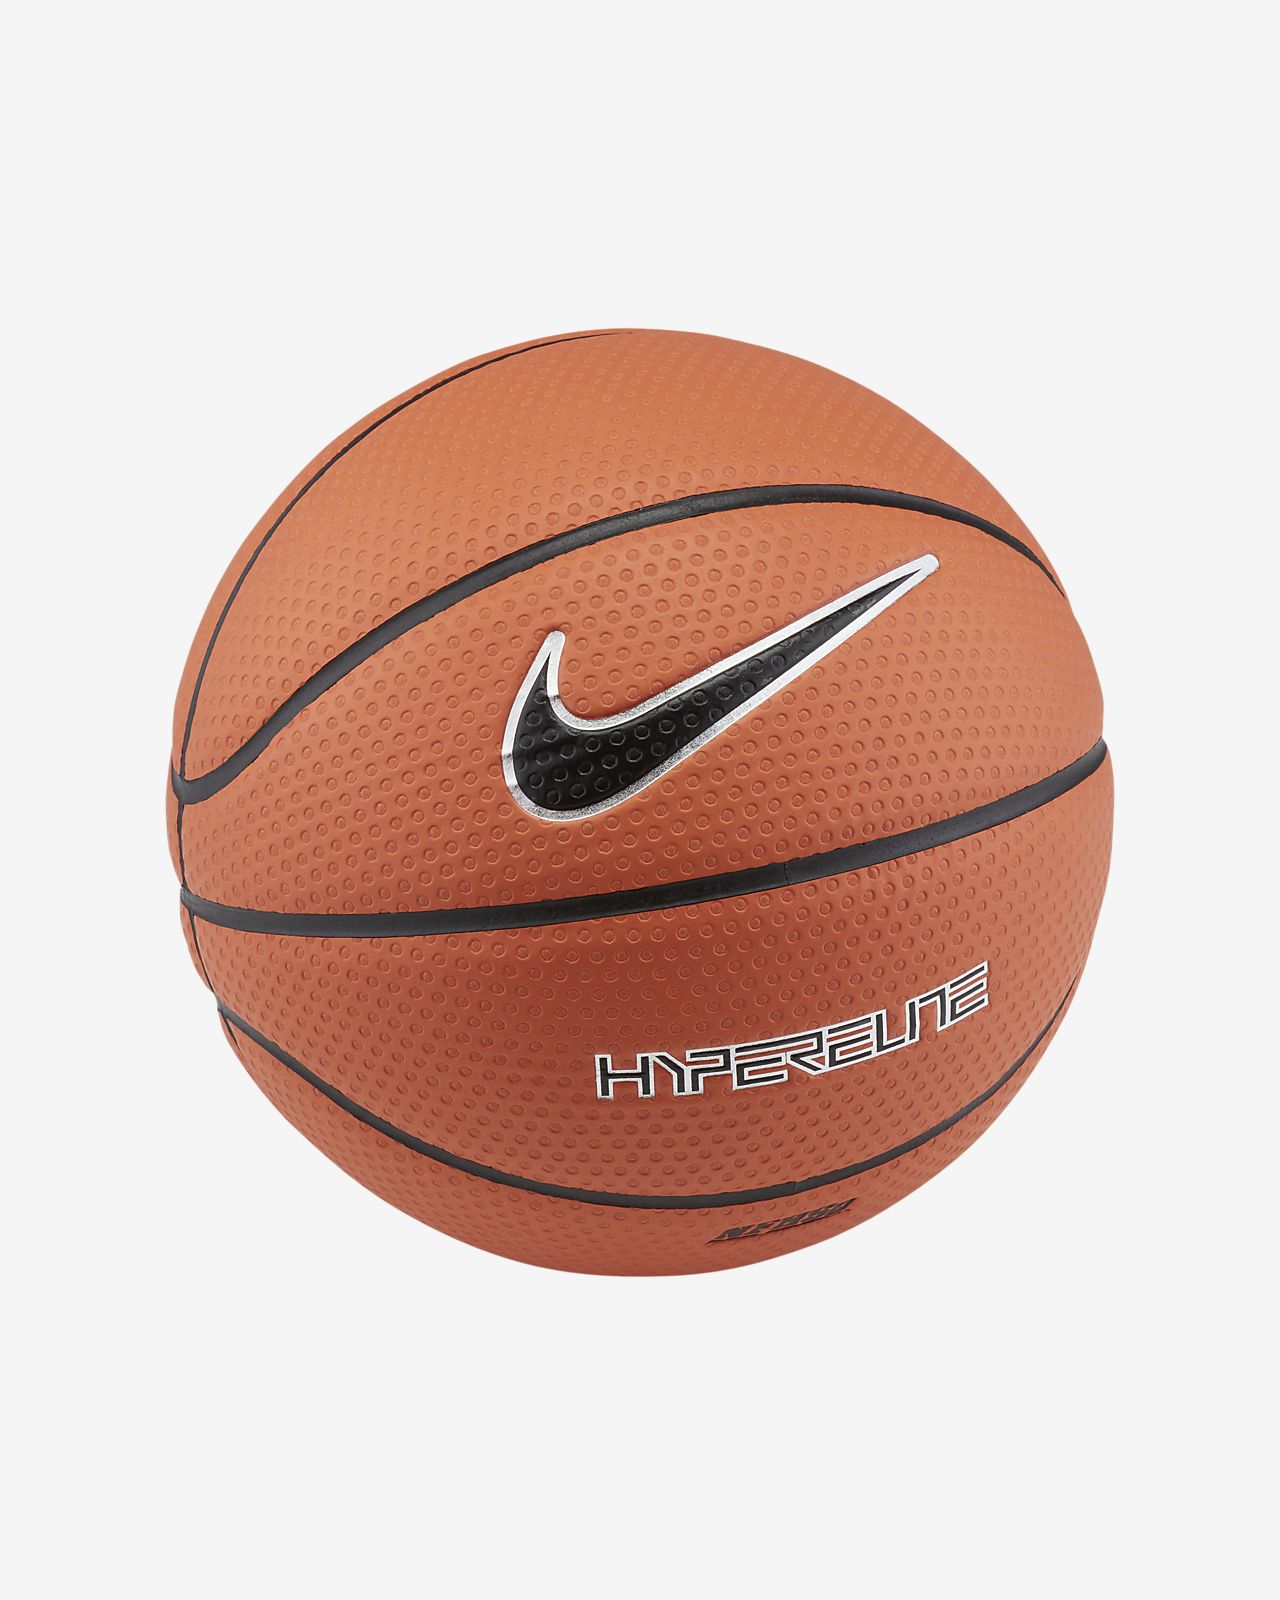 palloni da basket jordan